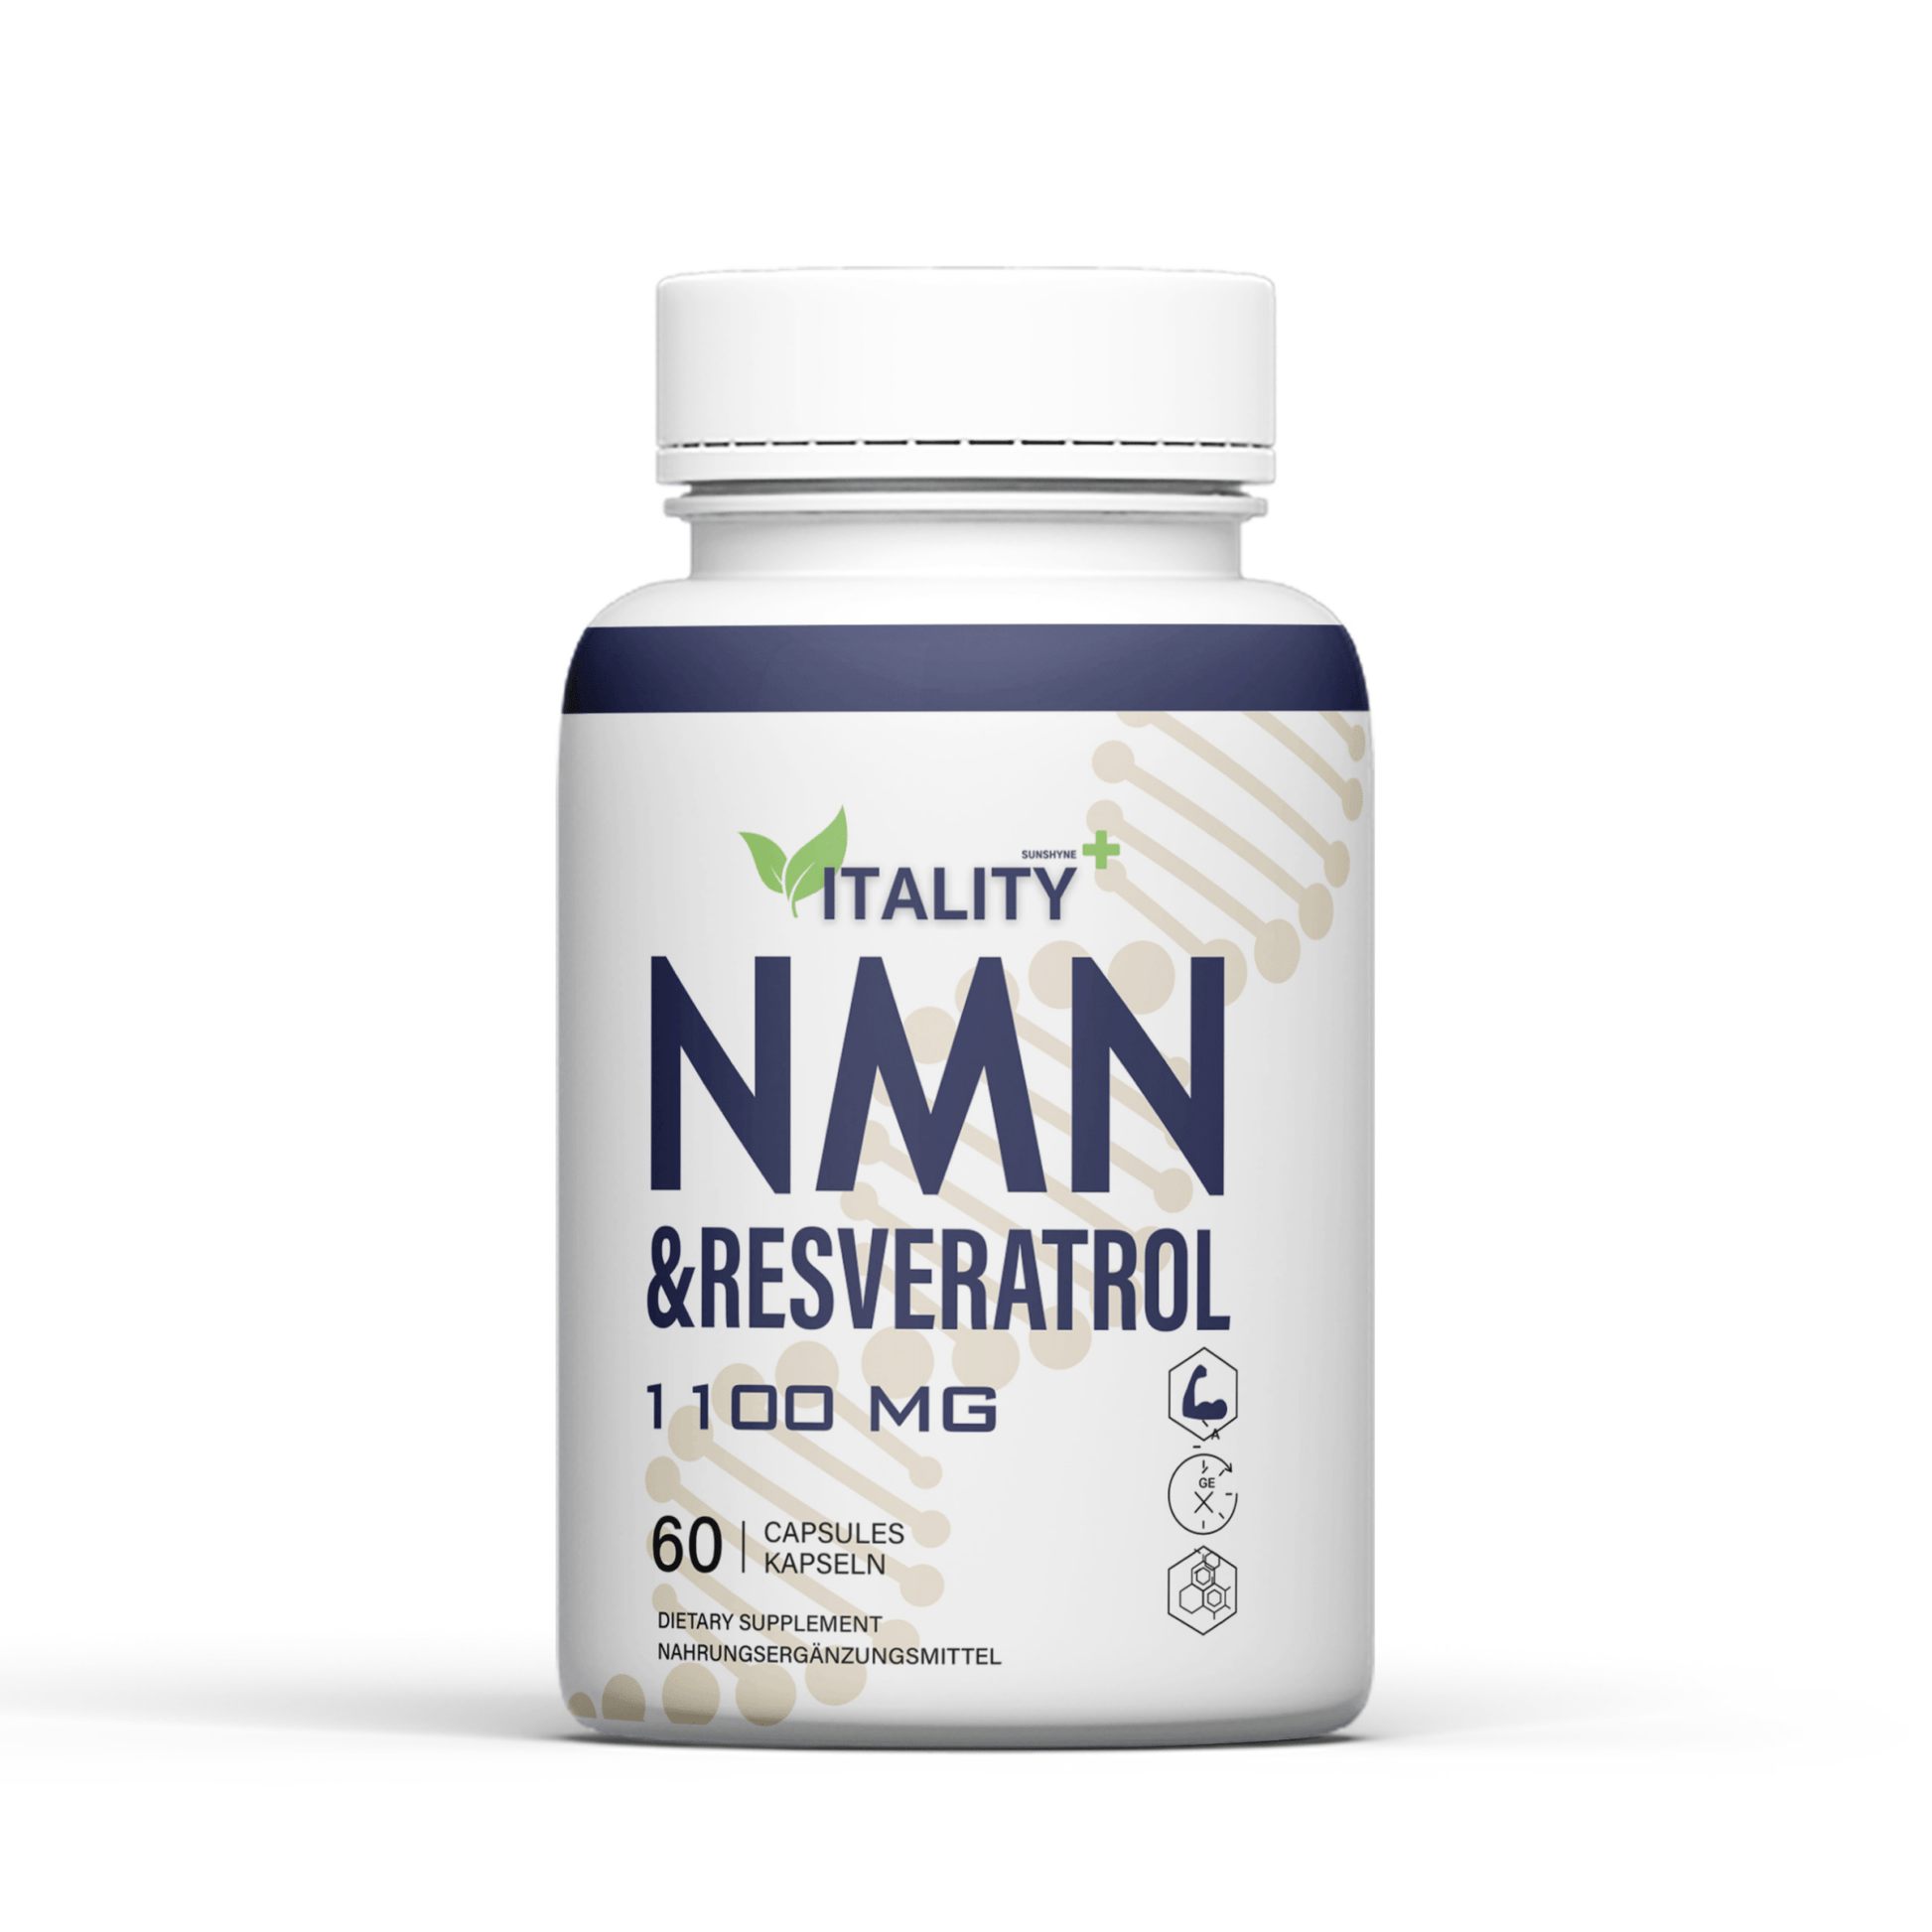 Premium NMN & Resveratrol Supplement 3 Months Supply - Elevate NAD+, Cellular Health & Longevity | 1100mg 99.95% Purity - Vitality Supplements